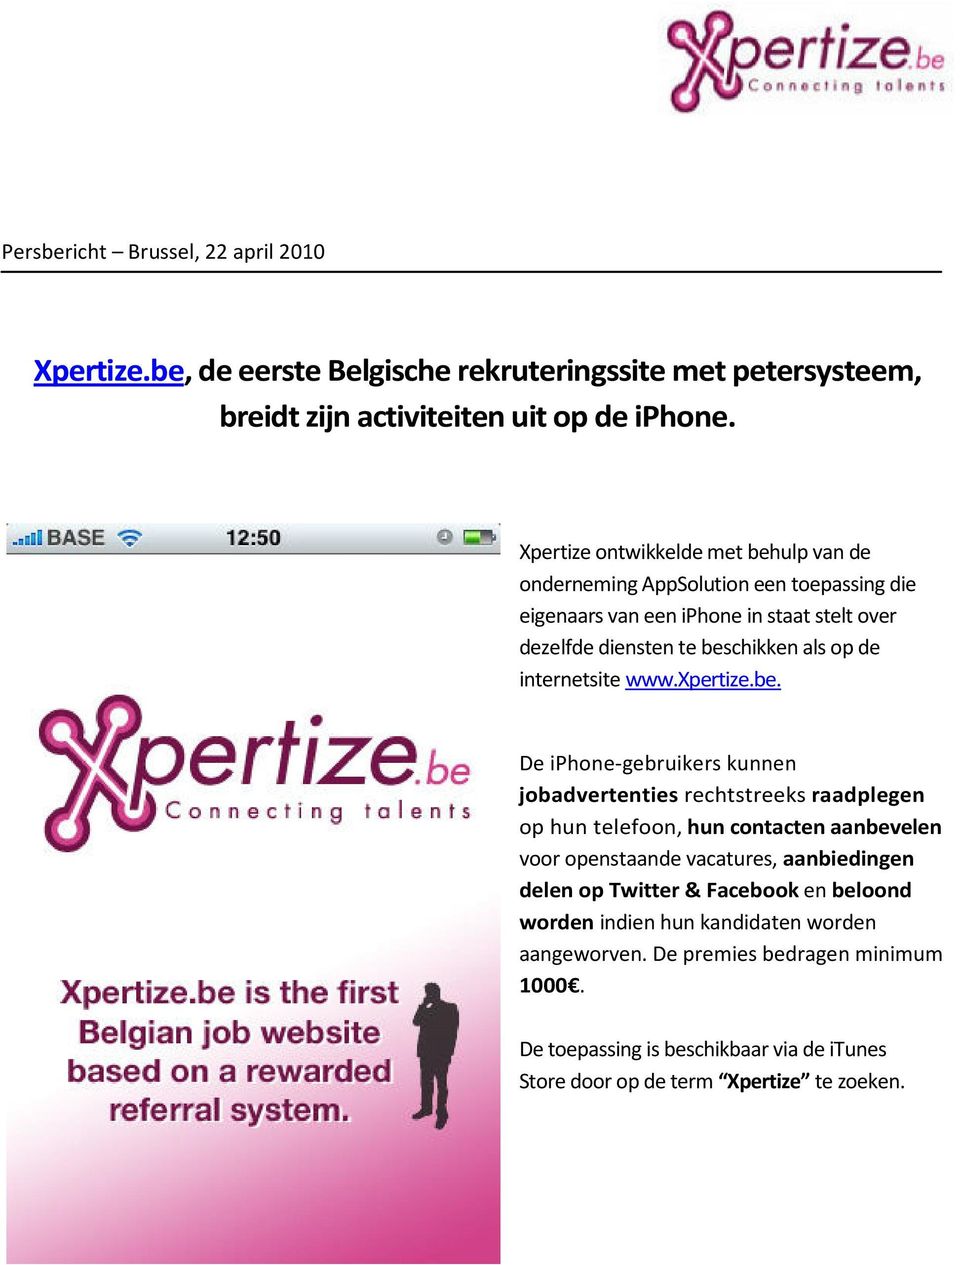 internetsite www.xpertize.be.